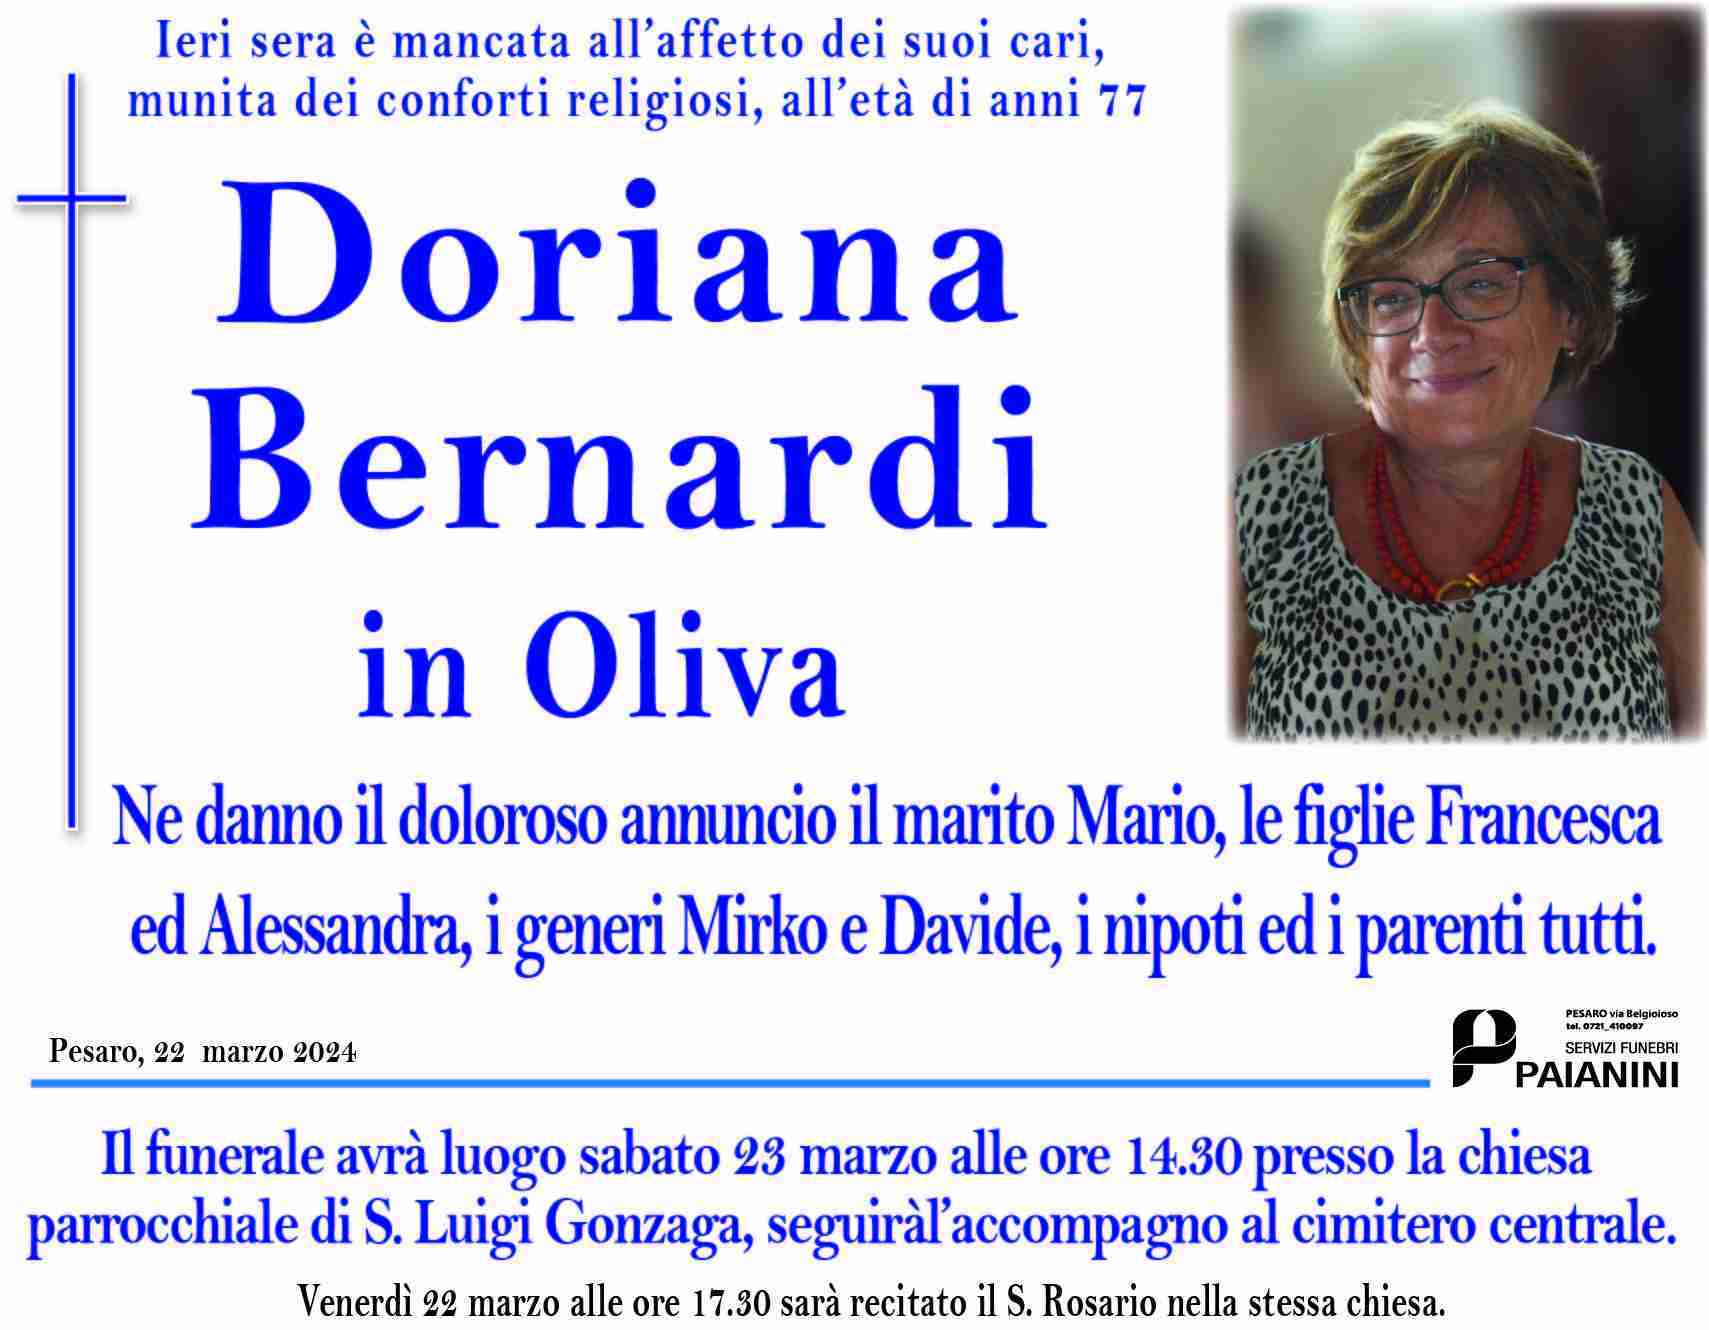 Doriana Bernardi